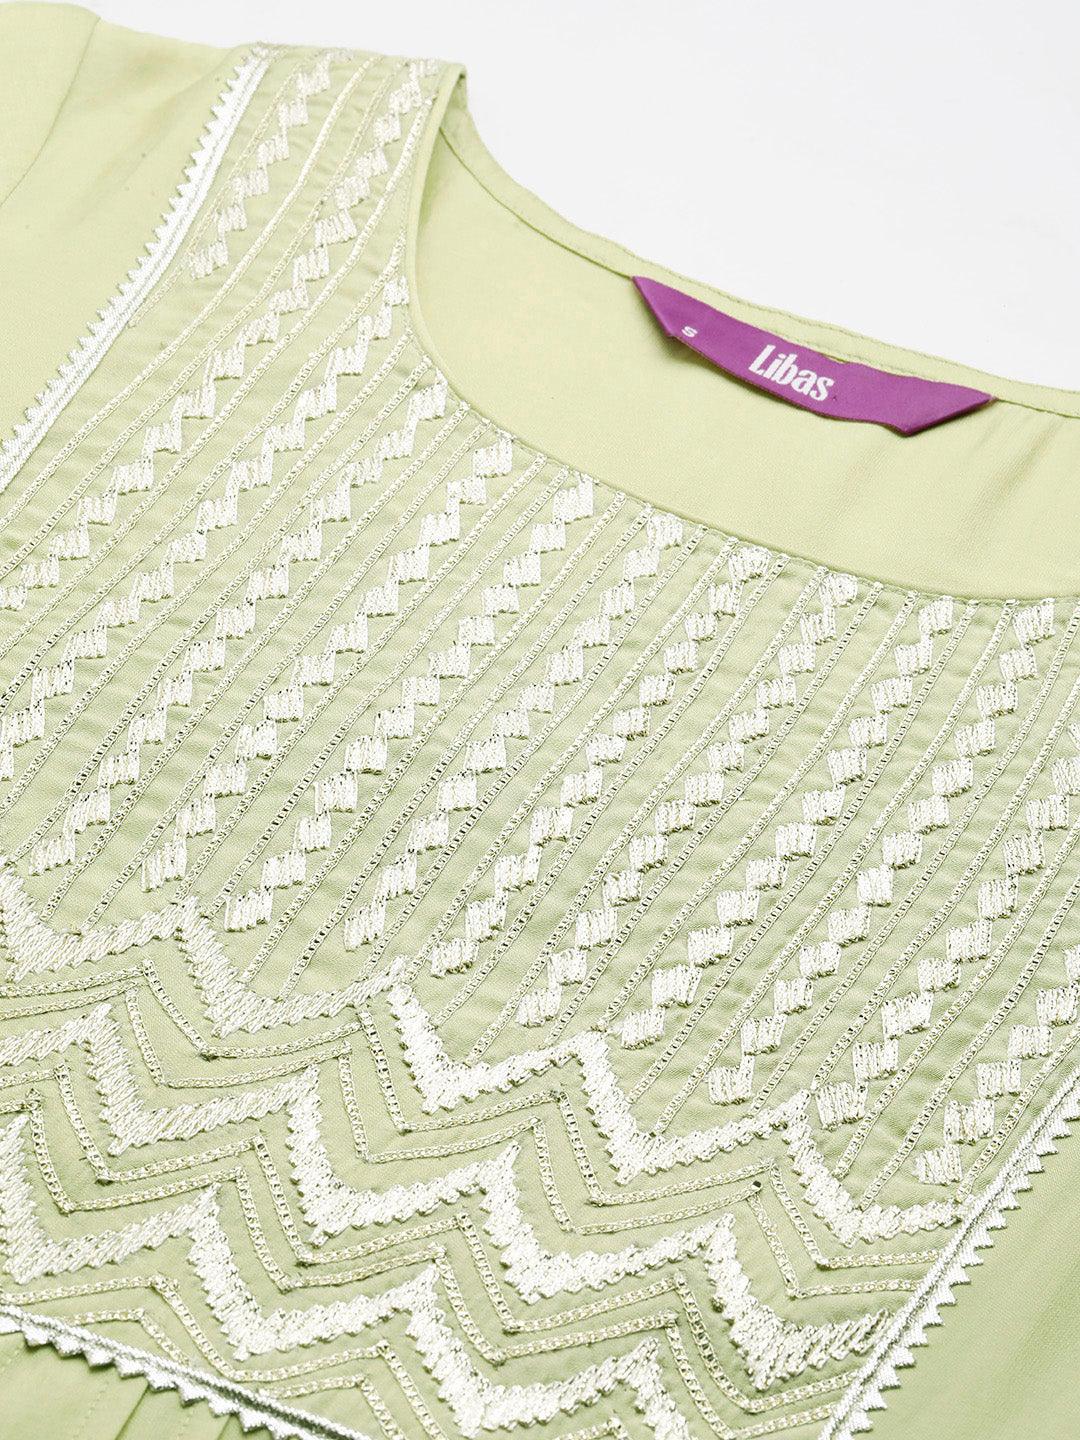 Green Yoke Design Silk Blend A-Line Kurta With Trousers & Dupatta